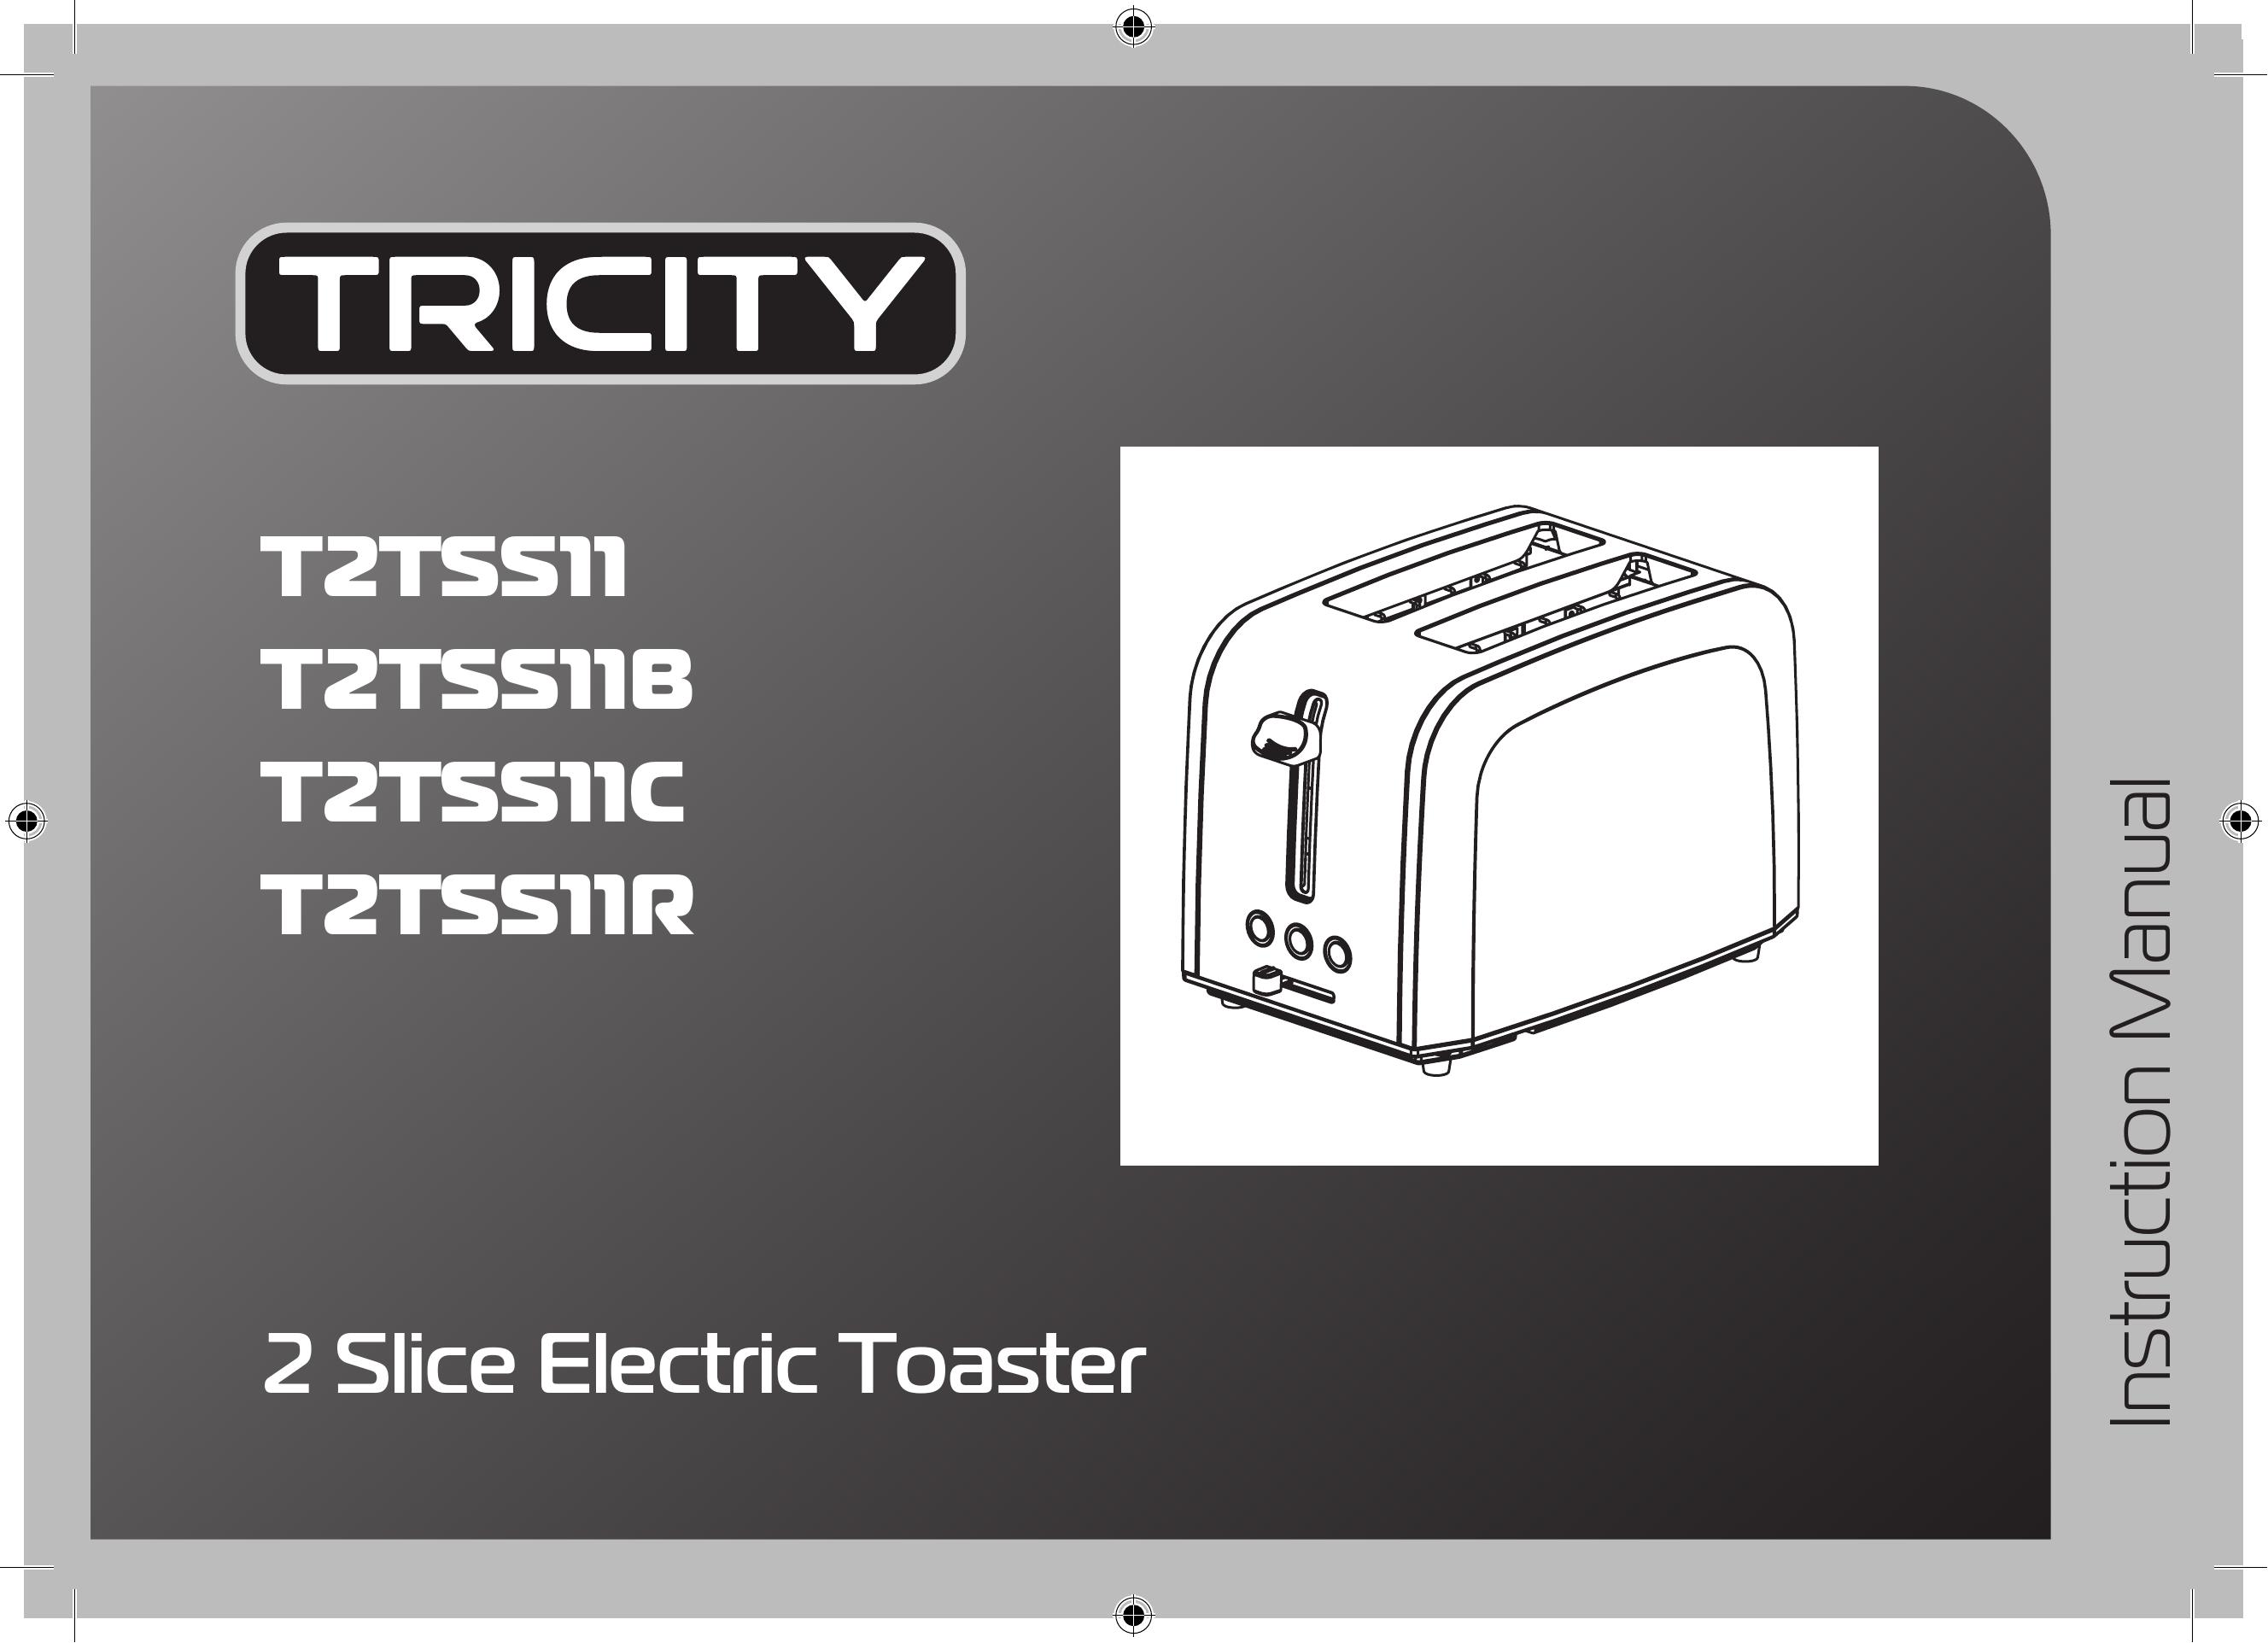 Tricity Bendix T2TSS11C Toaster User Manual